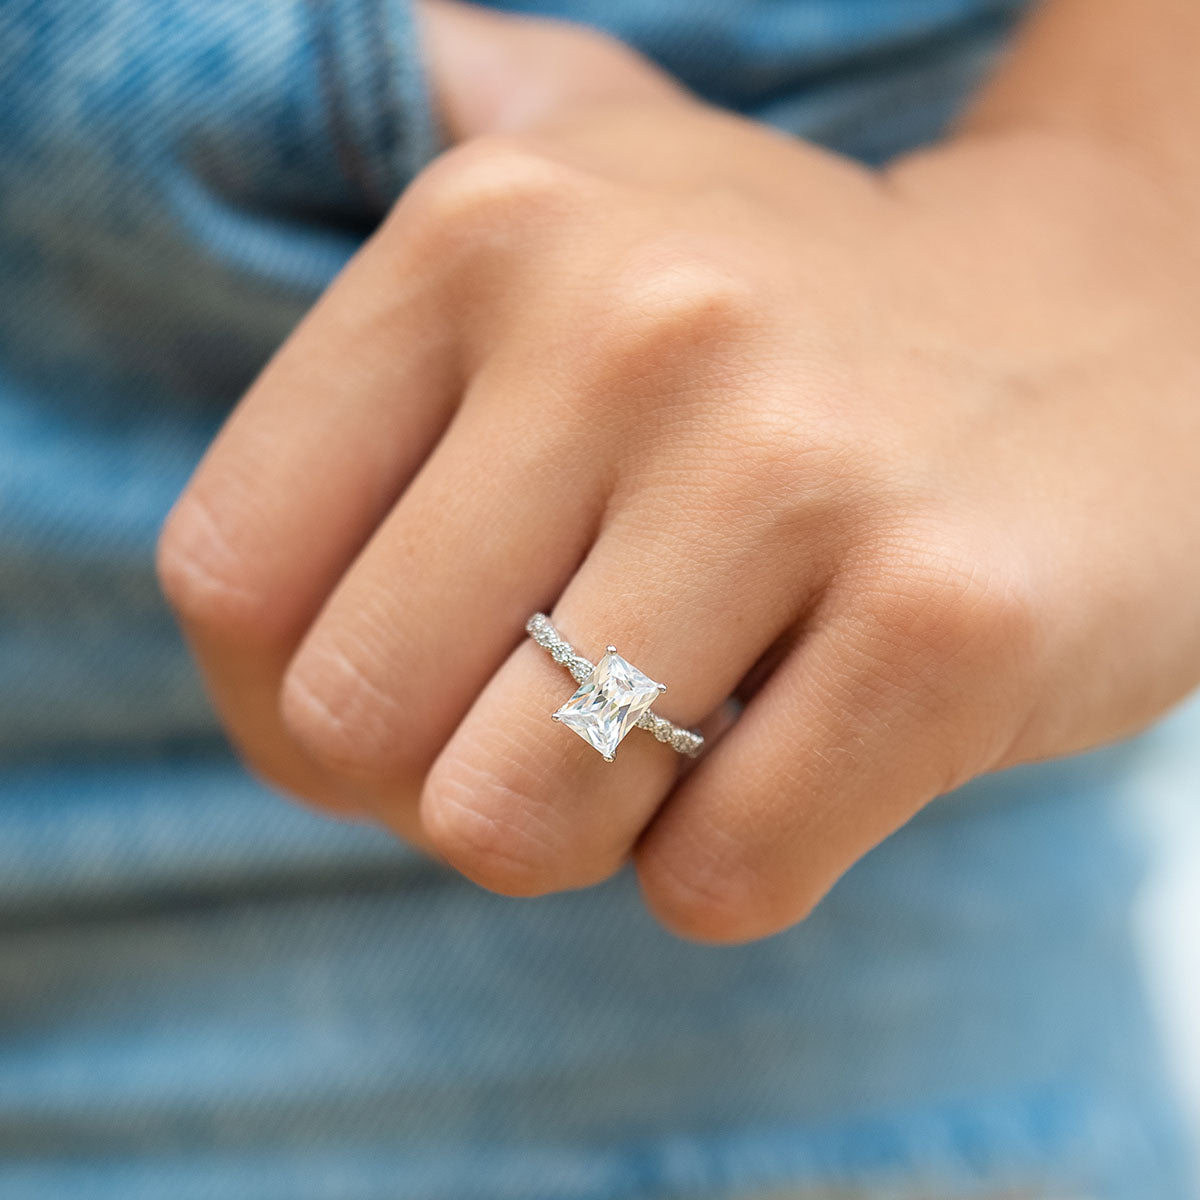 Elegant radiant cut engagement ring